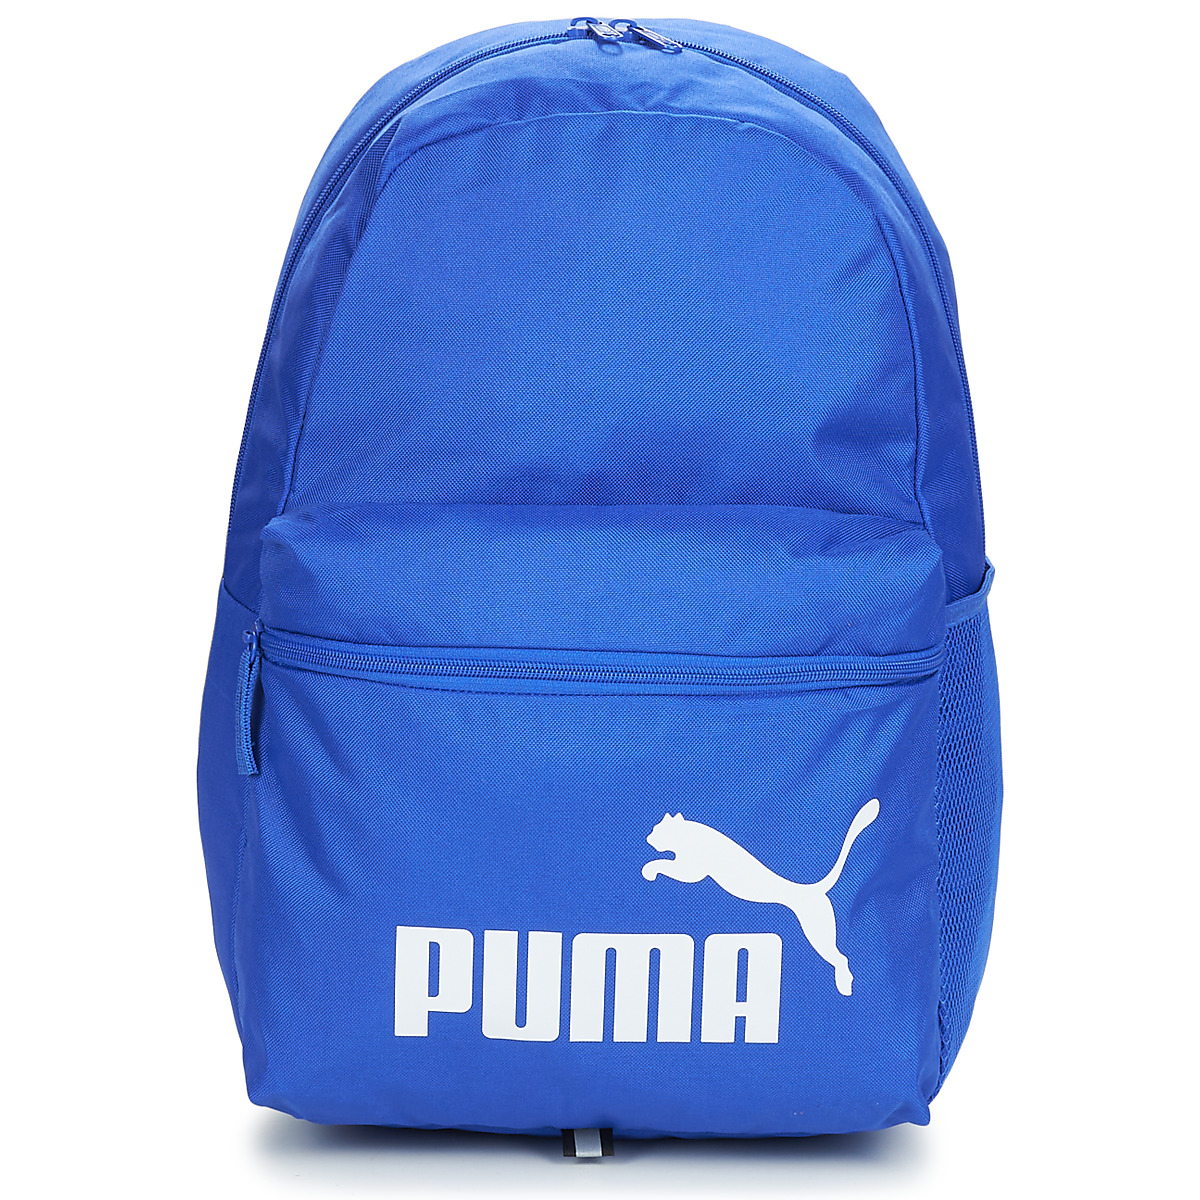 Puma PHASE BACKPACK Azul - Envío gratis